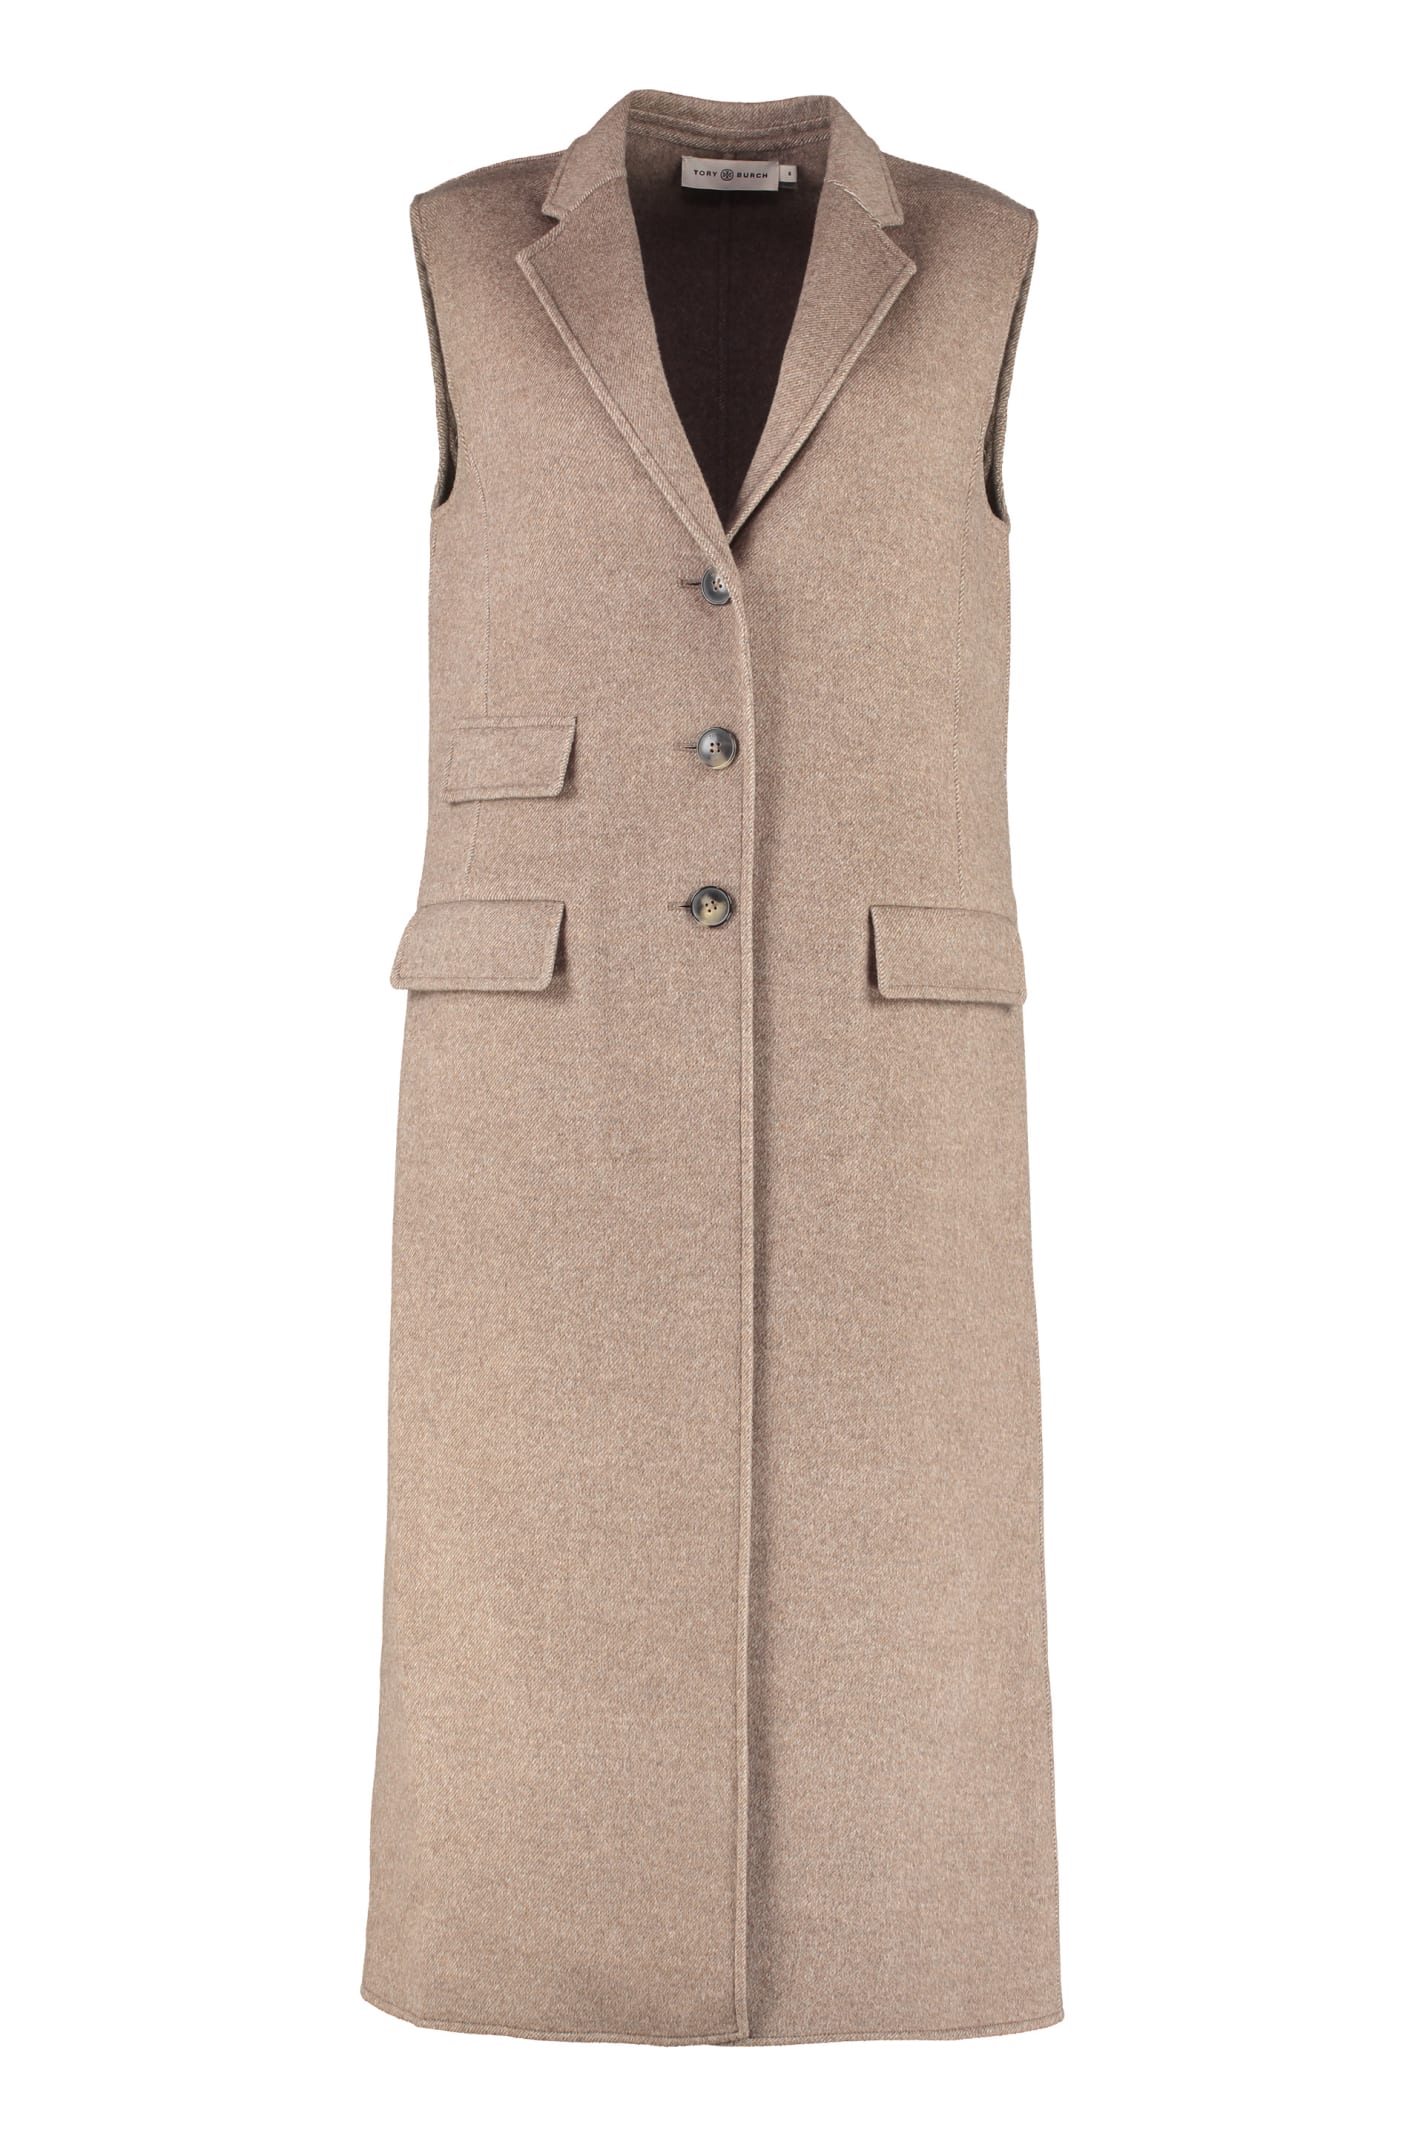 Tory Burch Wool Single-breast Waistcoat